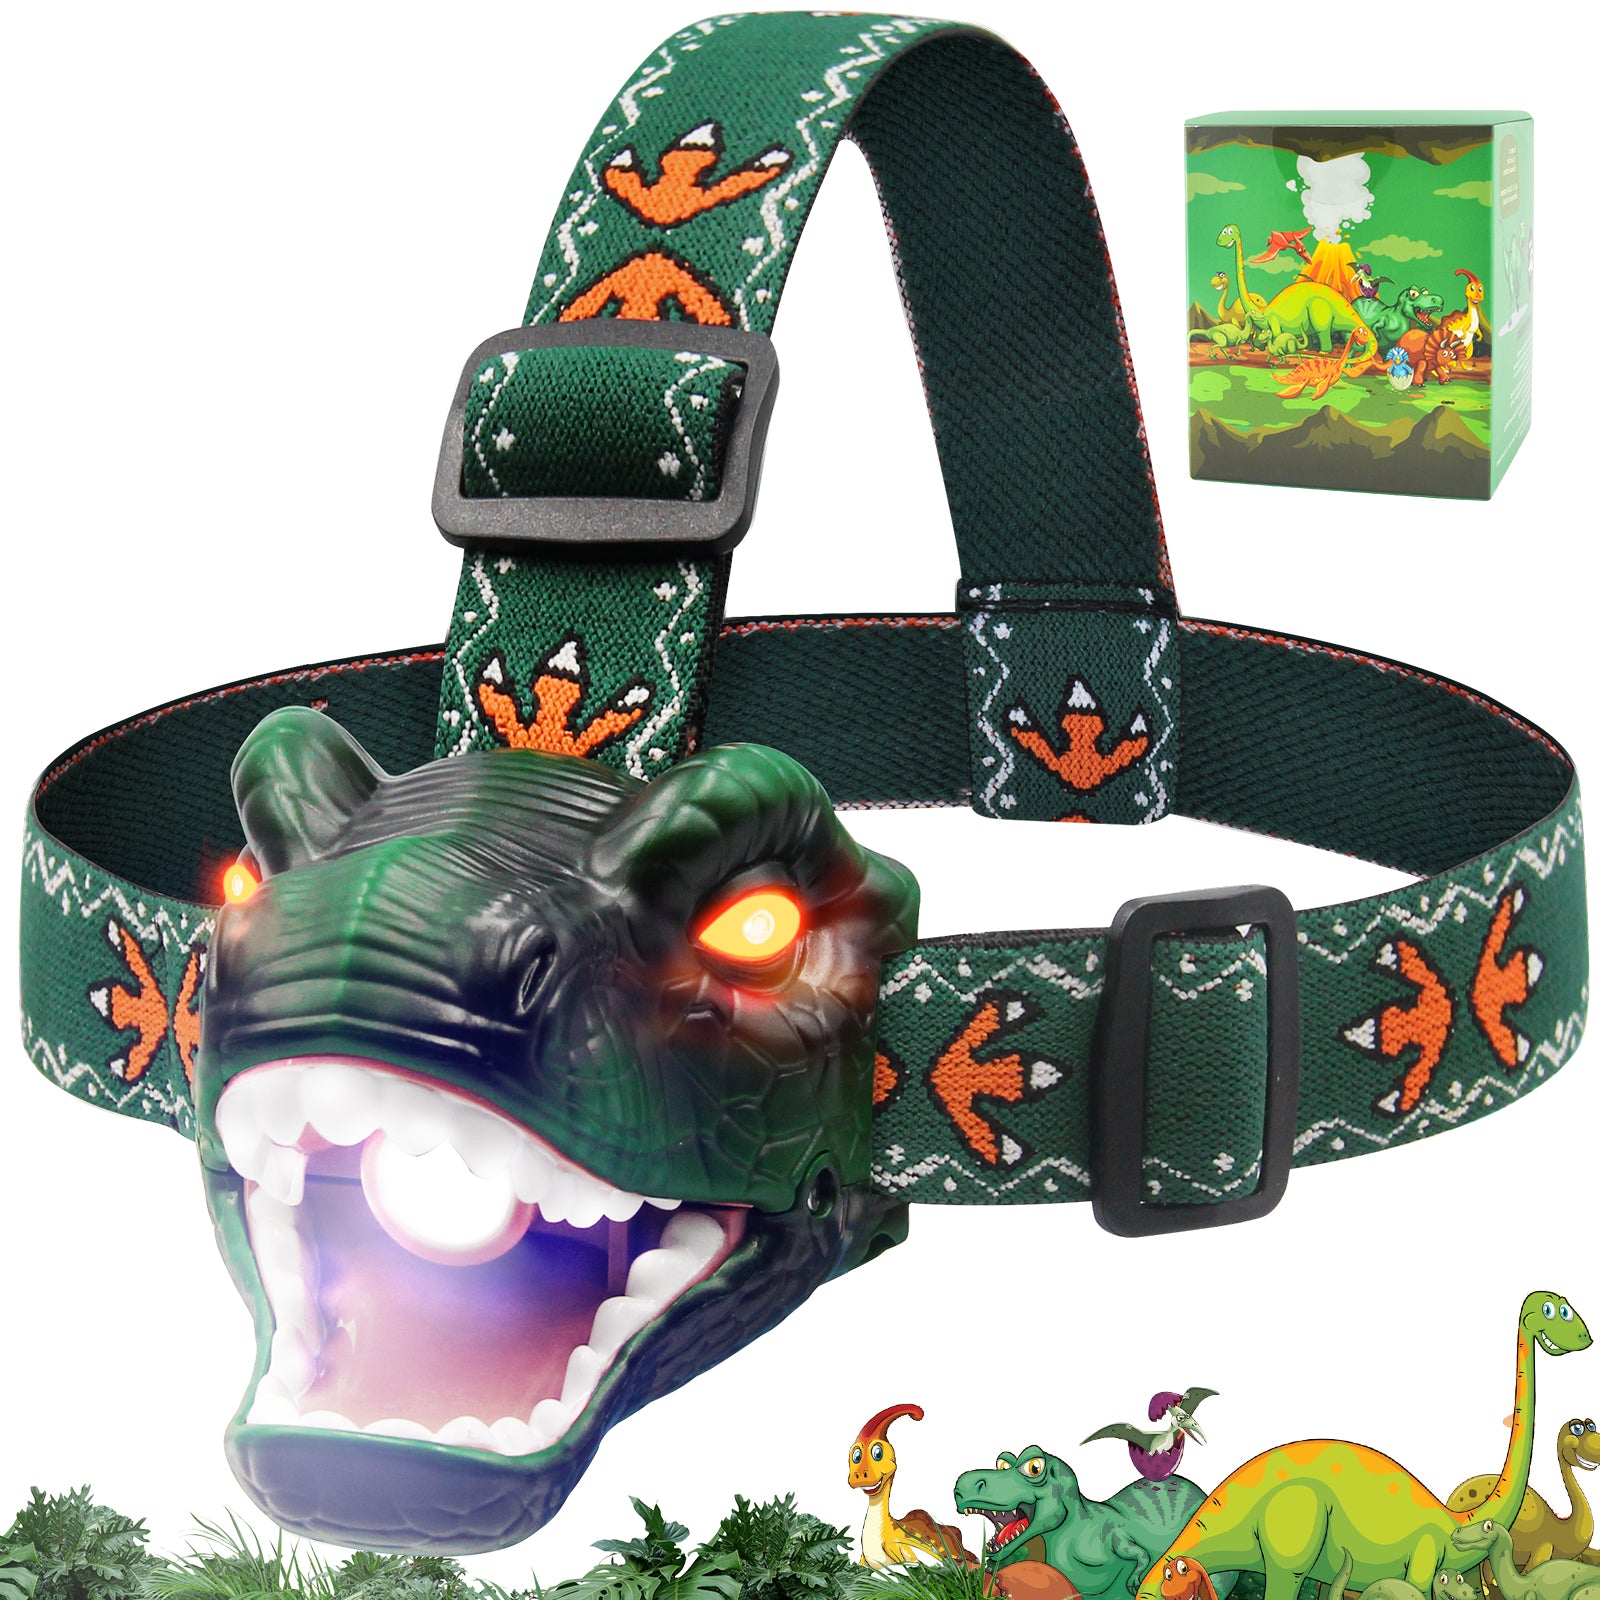 UK and DE Kids Headlamp, T-Rex Dinosaur Headlamp for Kids with 3 Light Modes, Simulate Dino Roar, Adjustable Headband